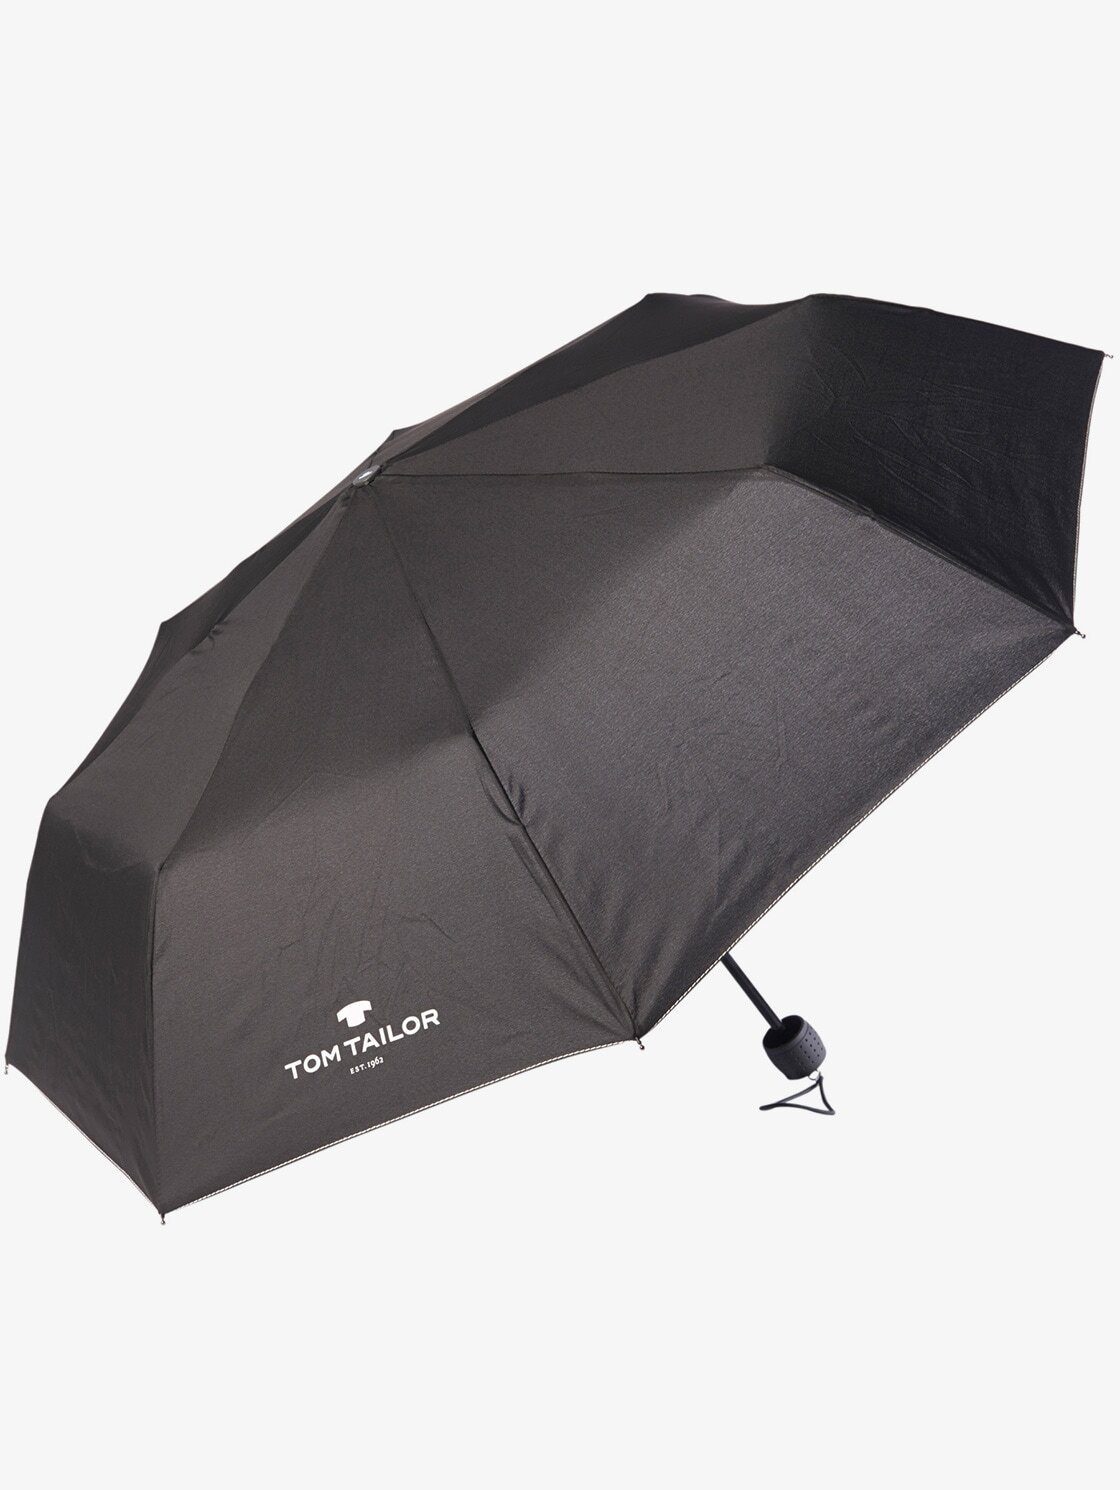 TOM TAILOR Taschenregenschirm Extra kleiner Regenschirm